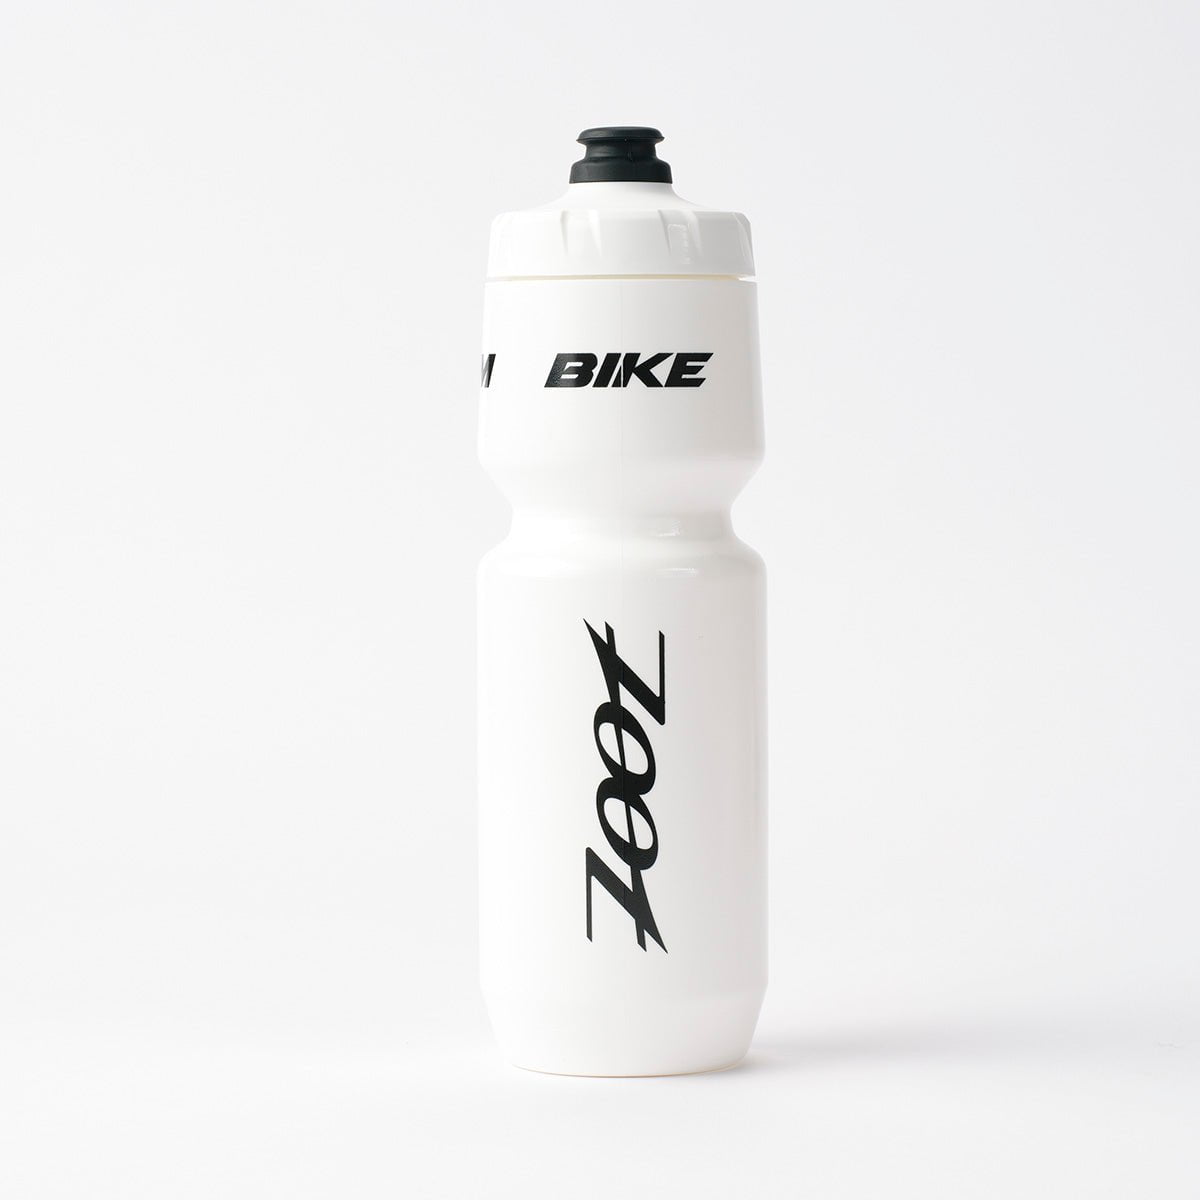 Fox 26 oz. Purist Water Bottle, Accessories / Bags